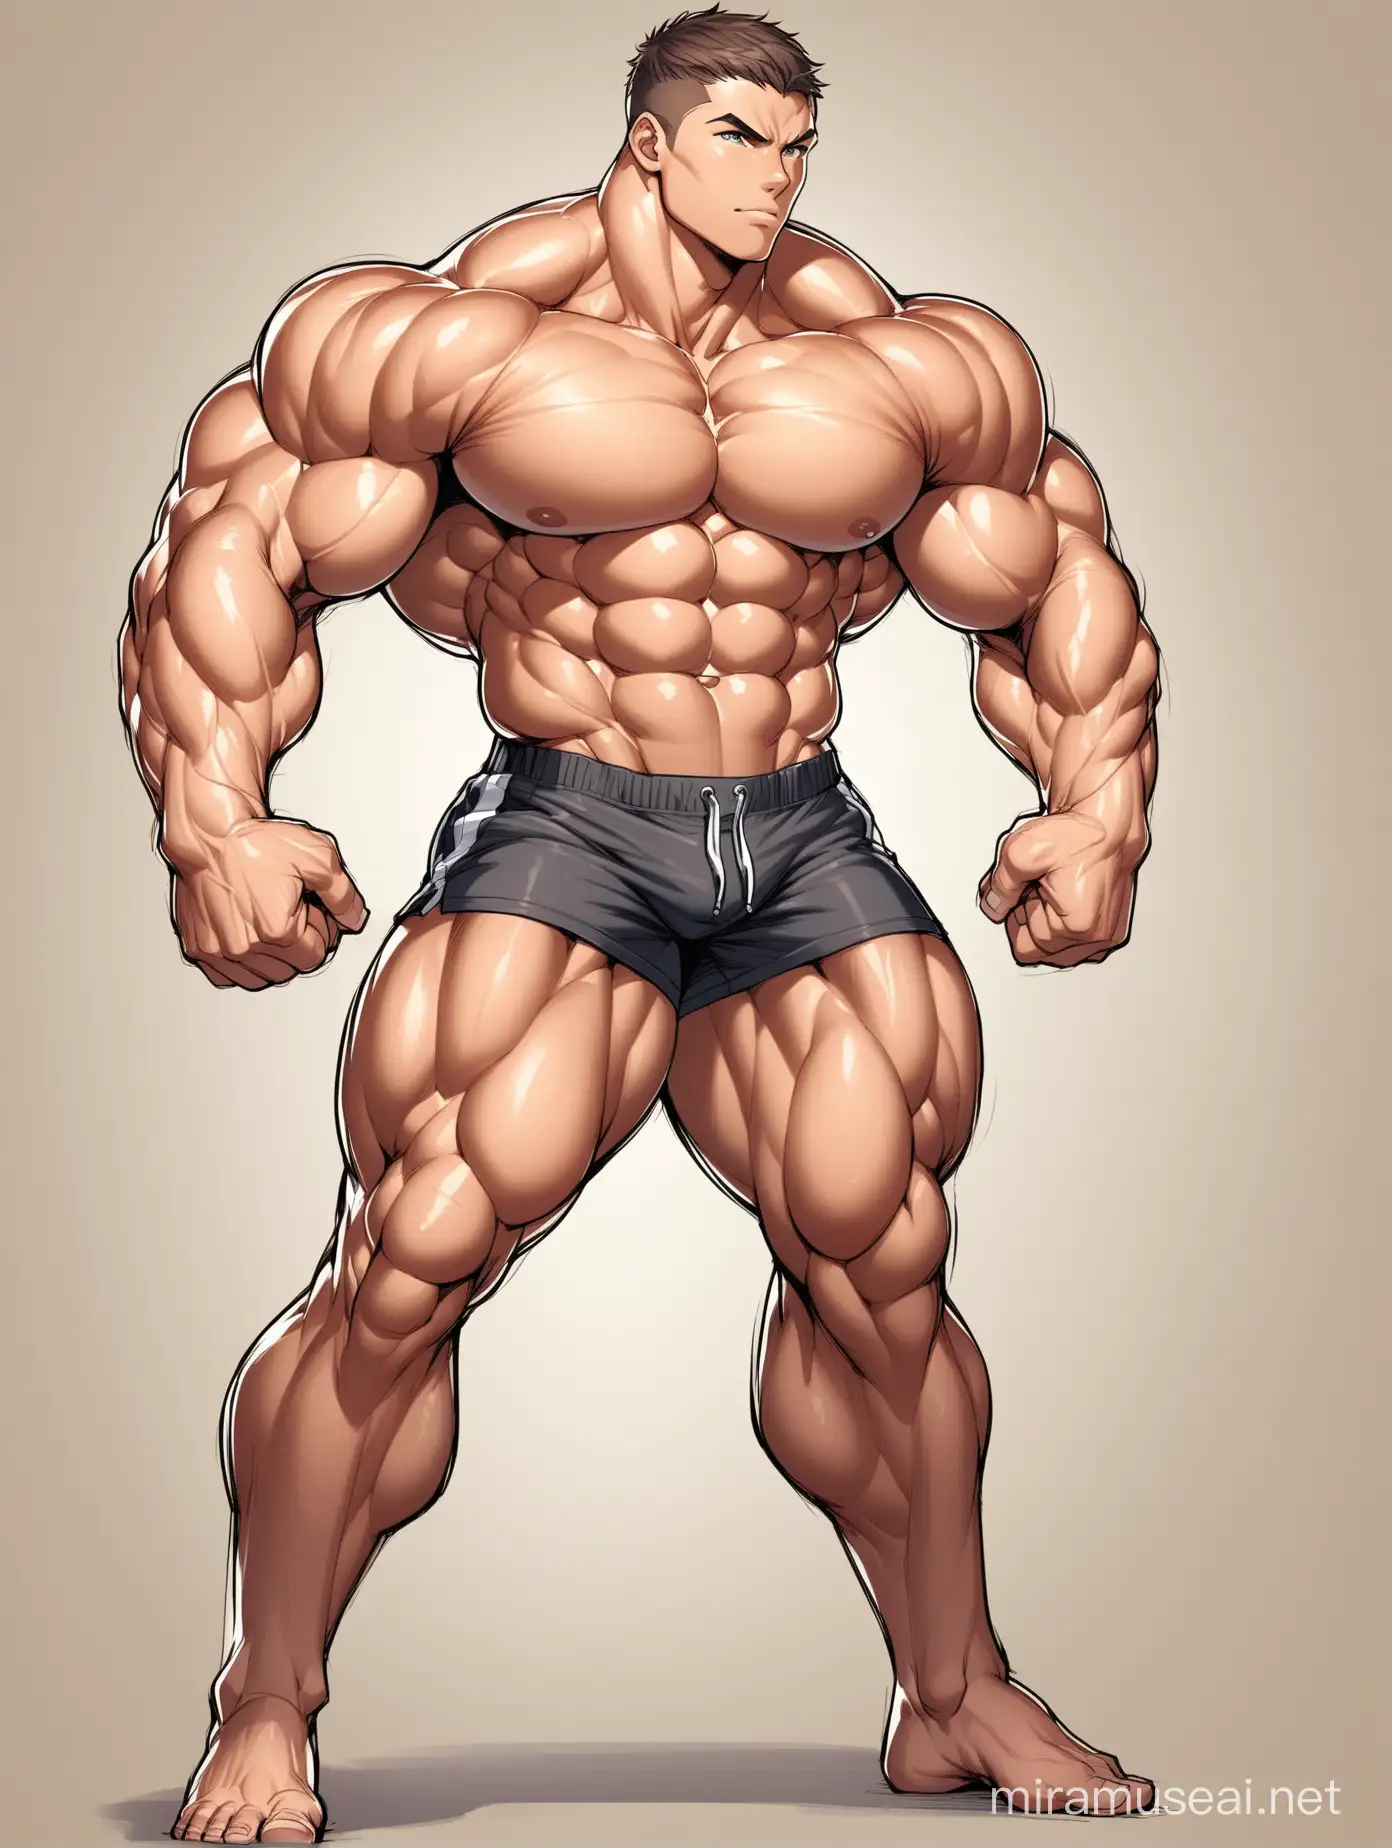 Vibrant Illustration of a Strikingly Muscular Teenage Boy in Stylish Shorts